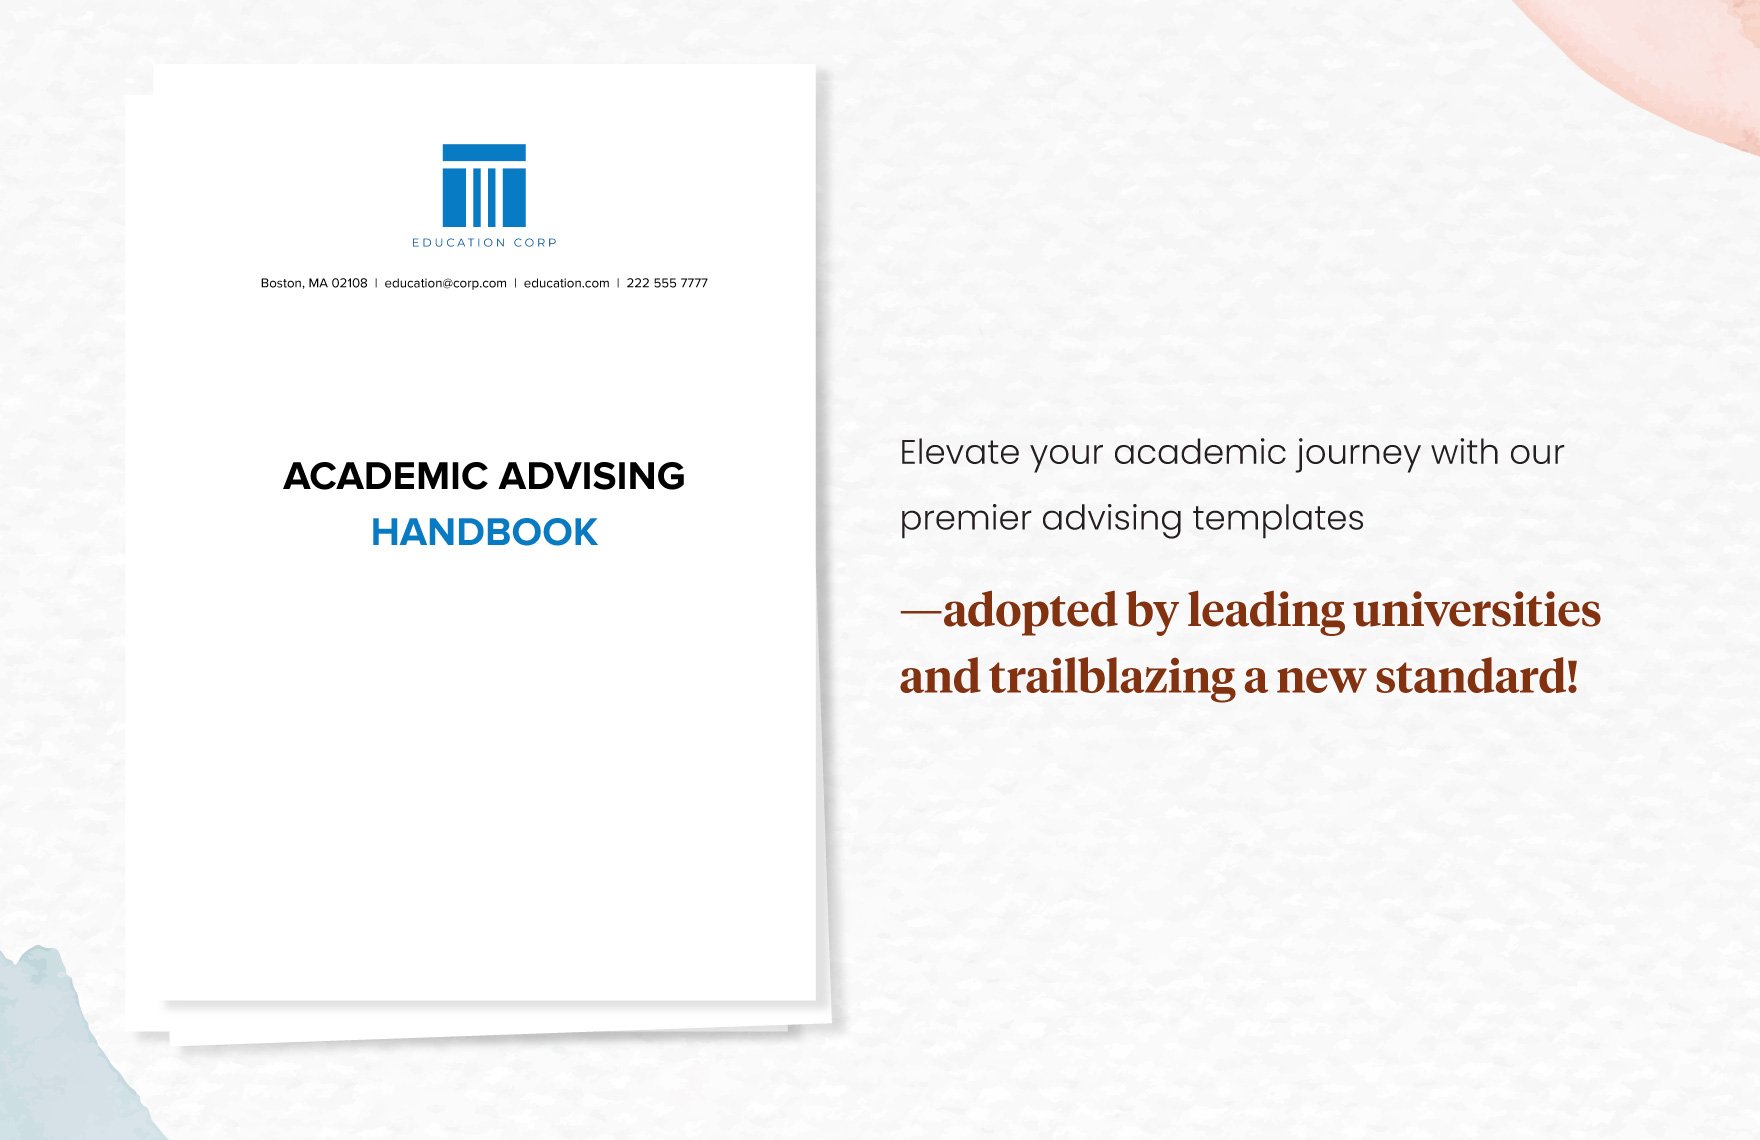 Academic Advising Handbook Template